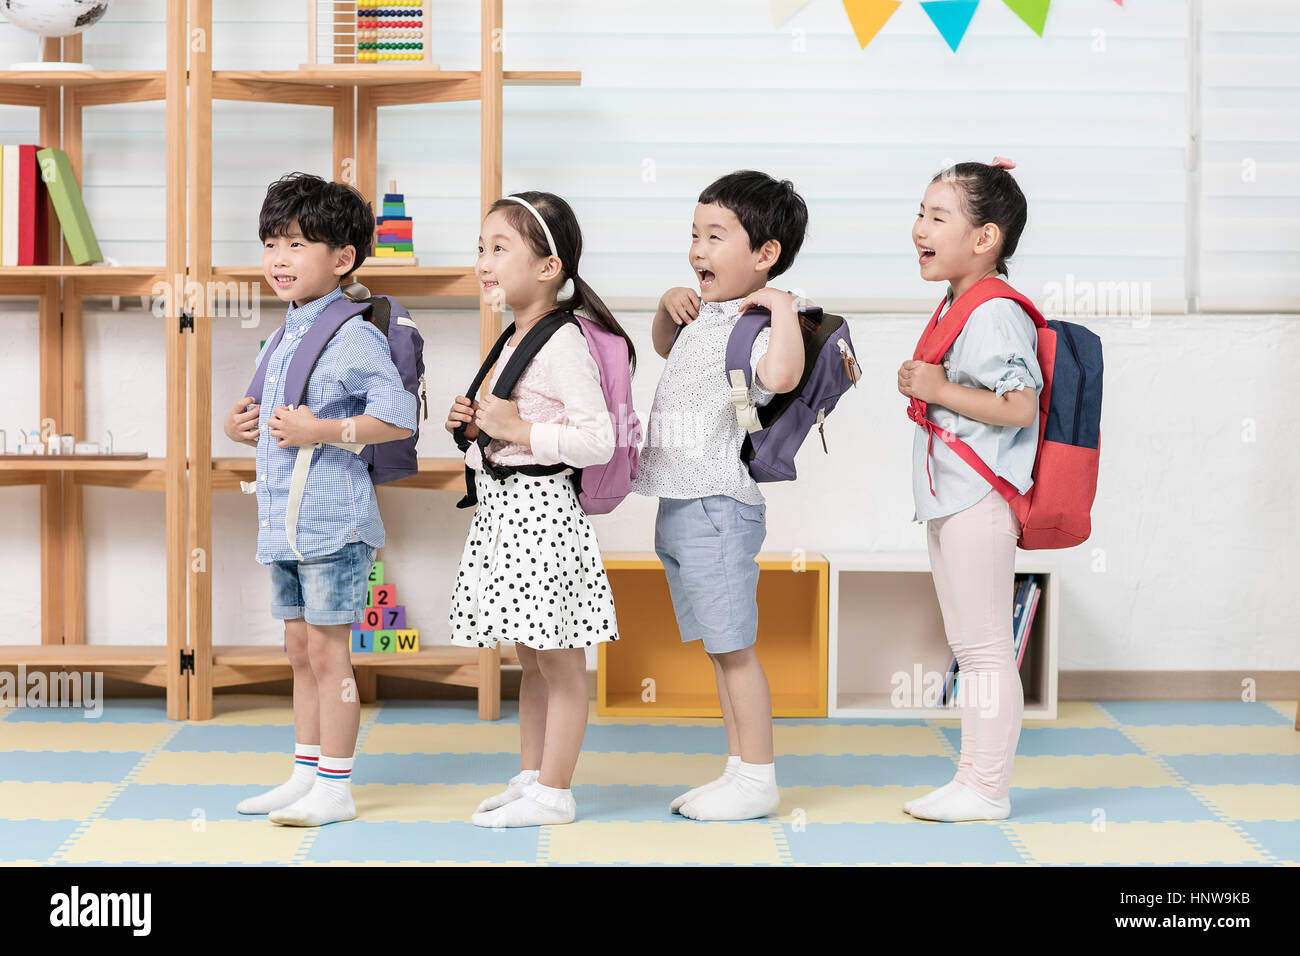 Smiling kindergarten children with backpacks lining up Stock Photo